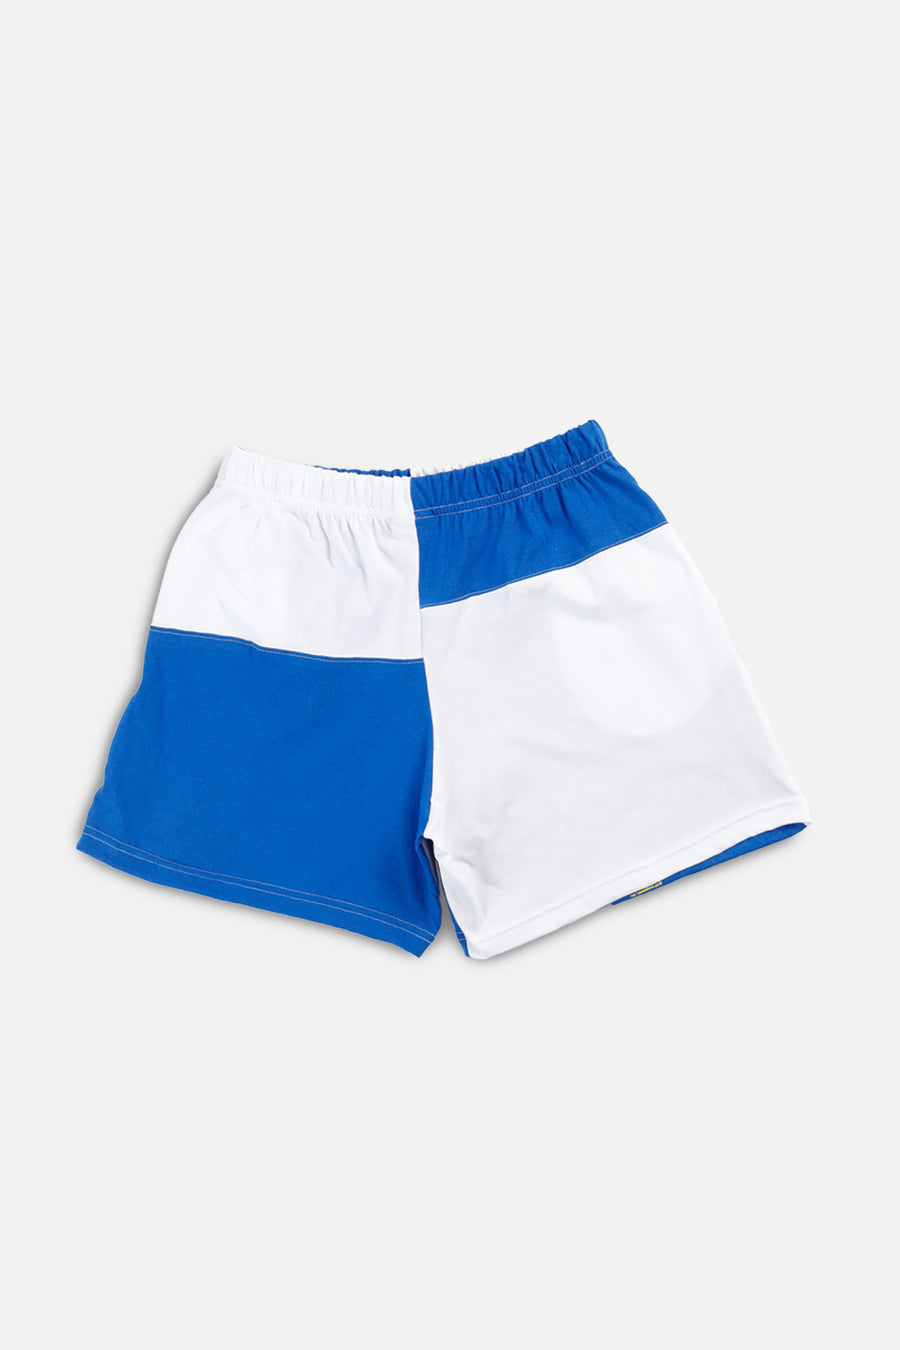 Unisex Rework Golden State Warriors NBA Tee Shorts - S